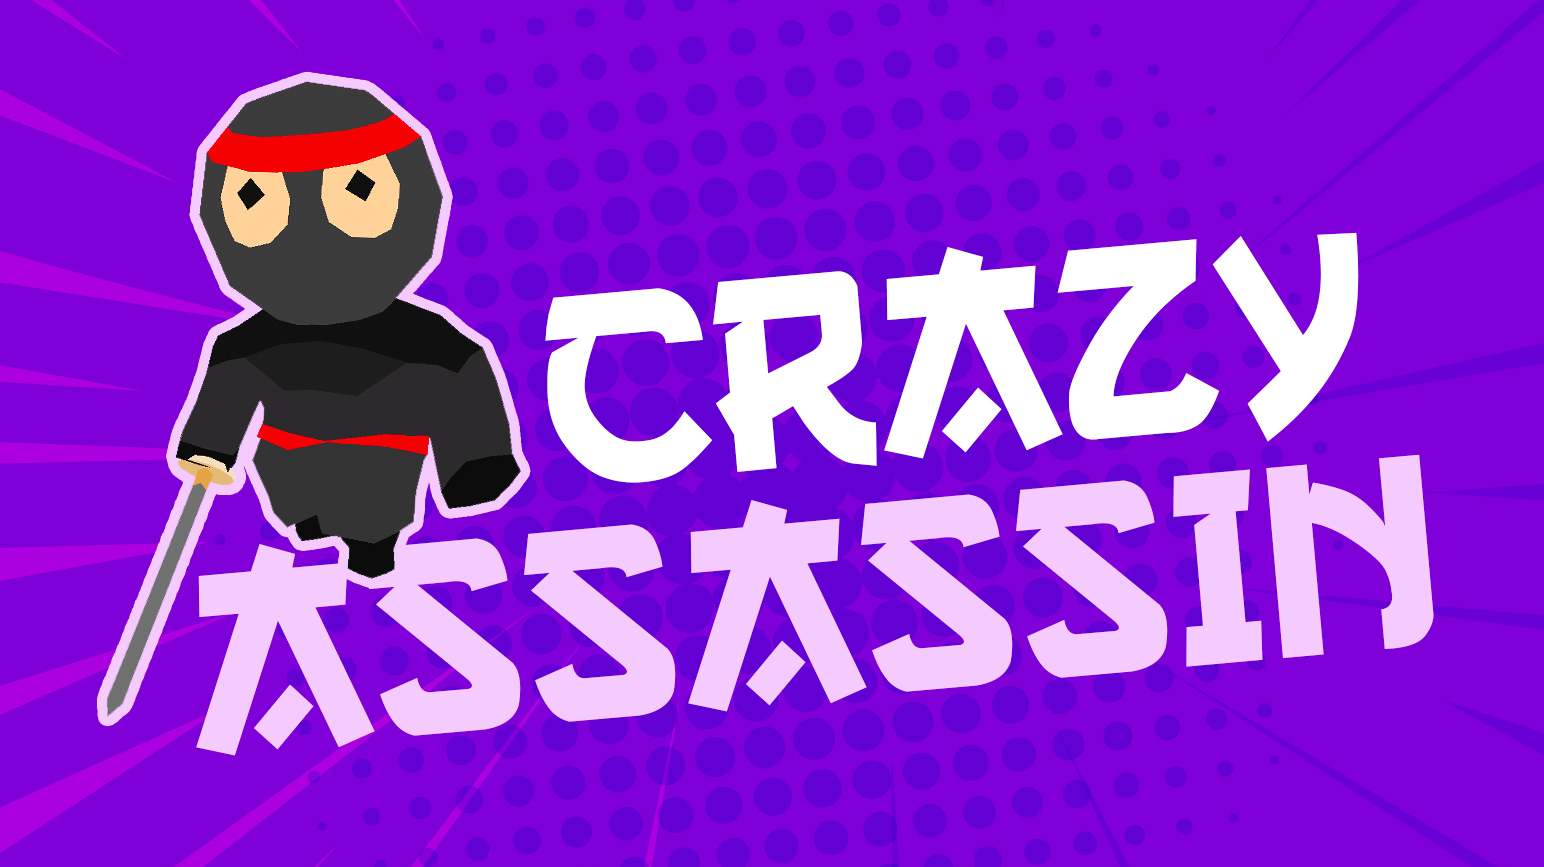 Crazy Assassin Game Image